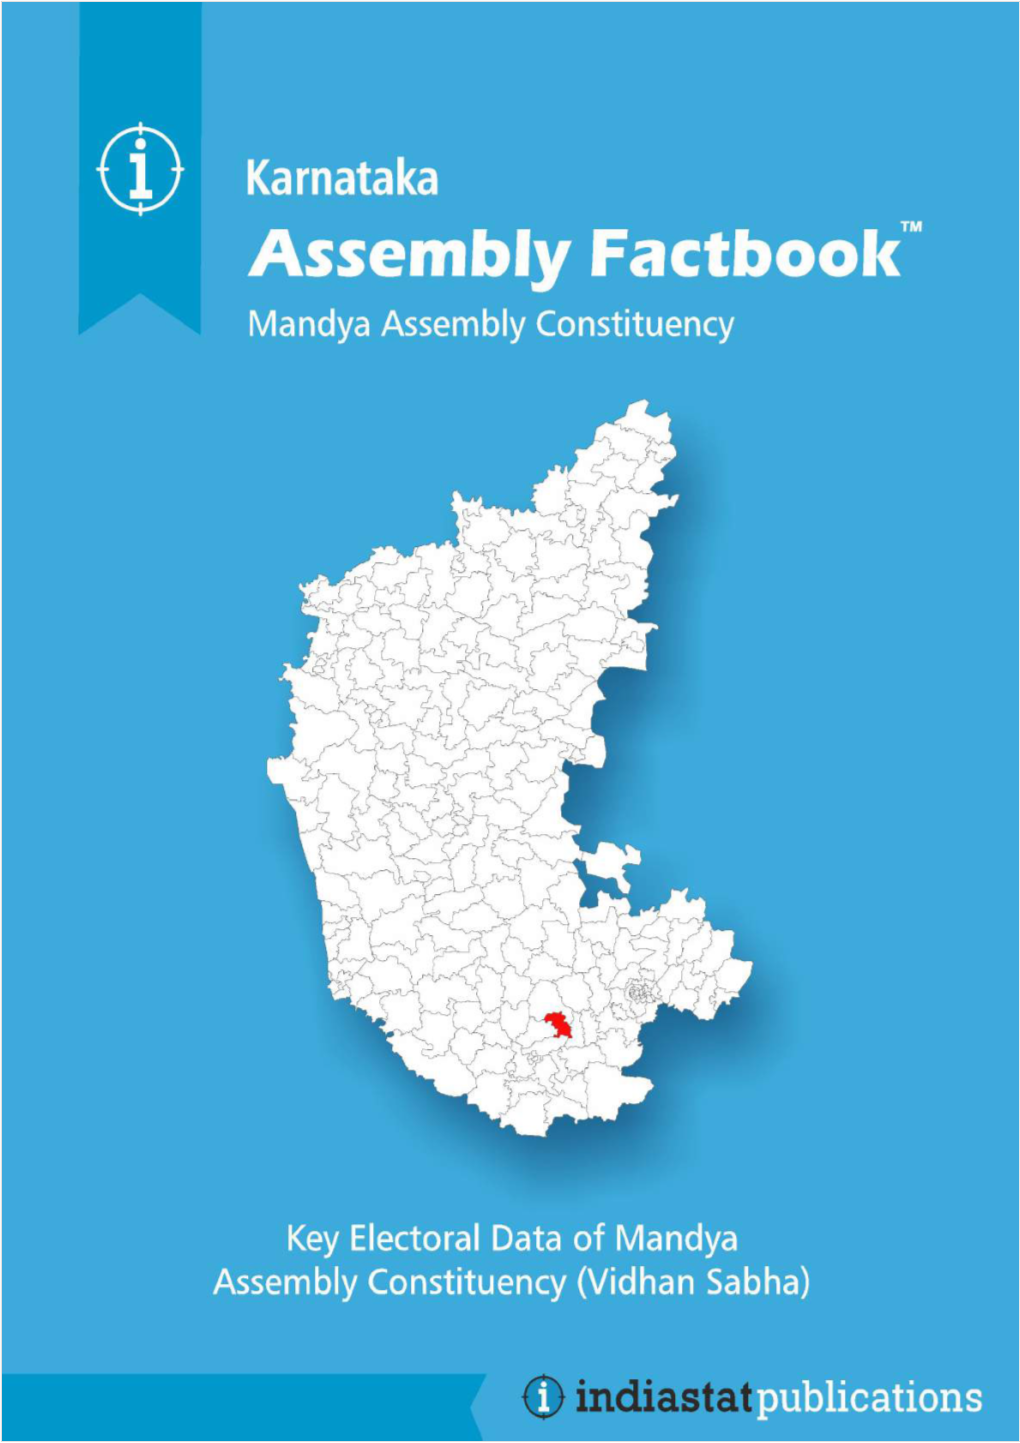 Mandya Assembly Karnataka Factbook